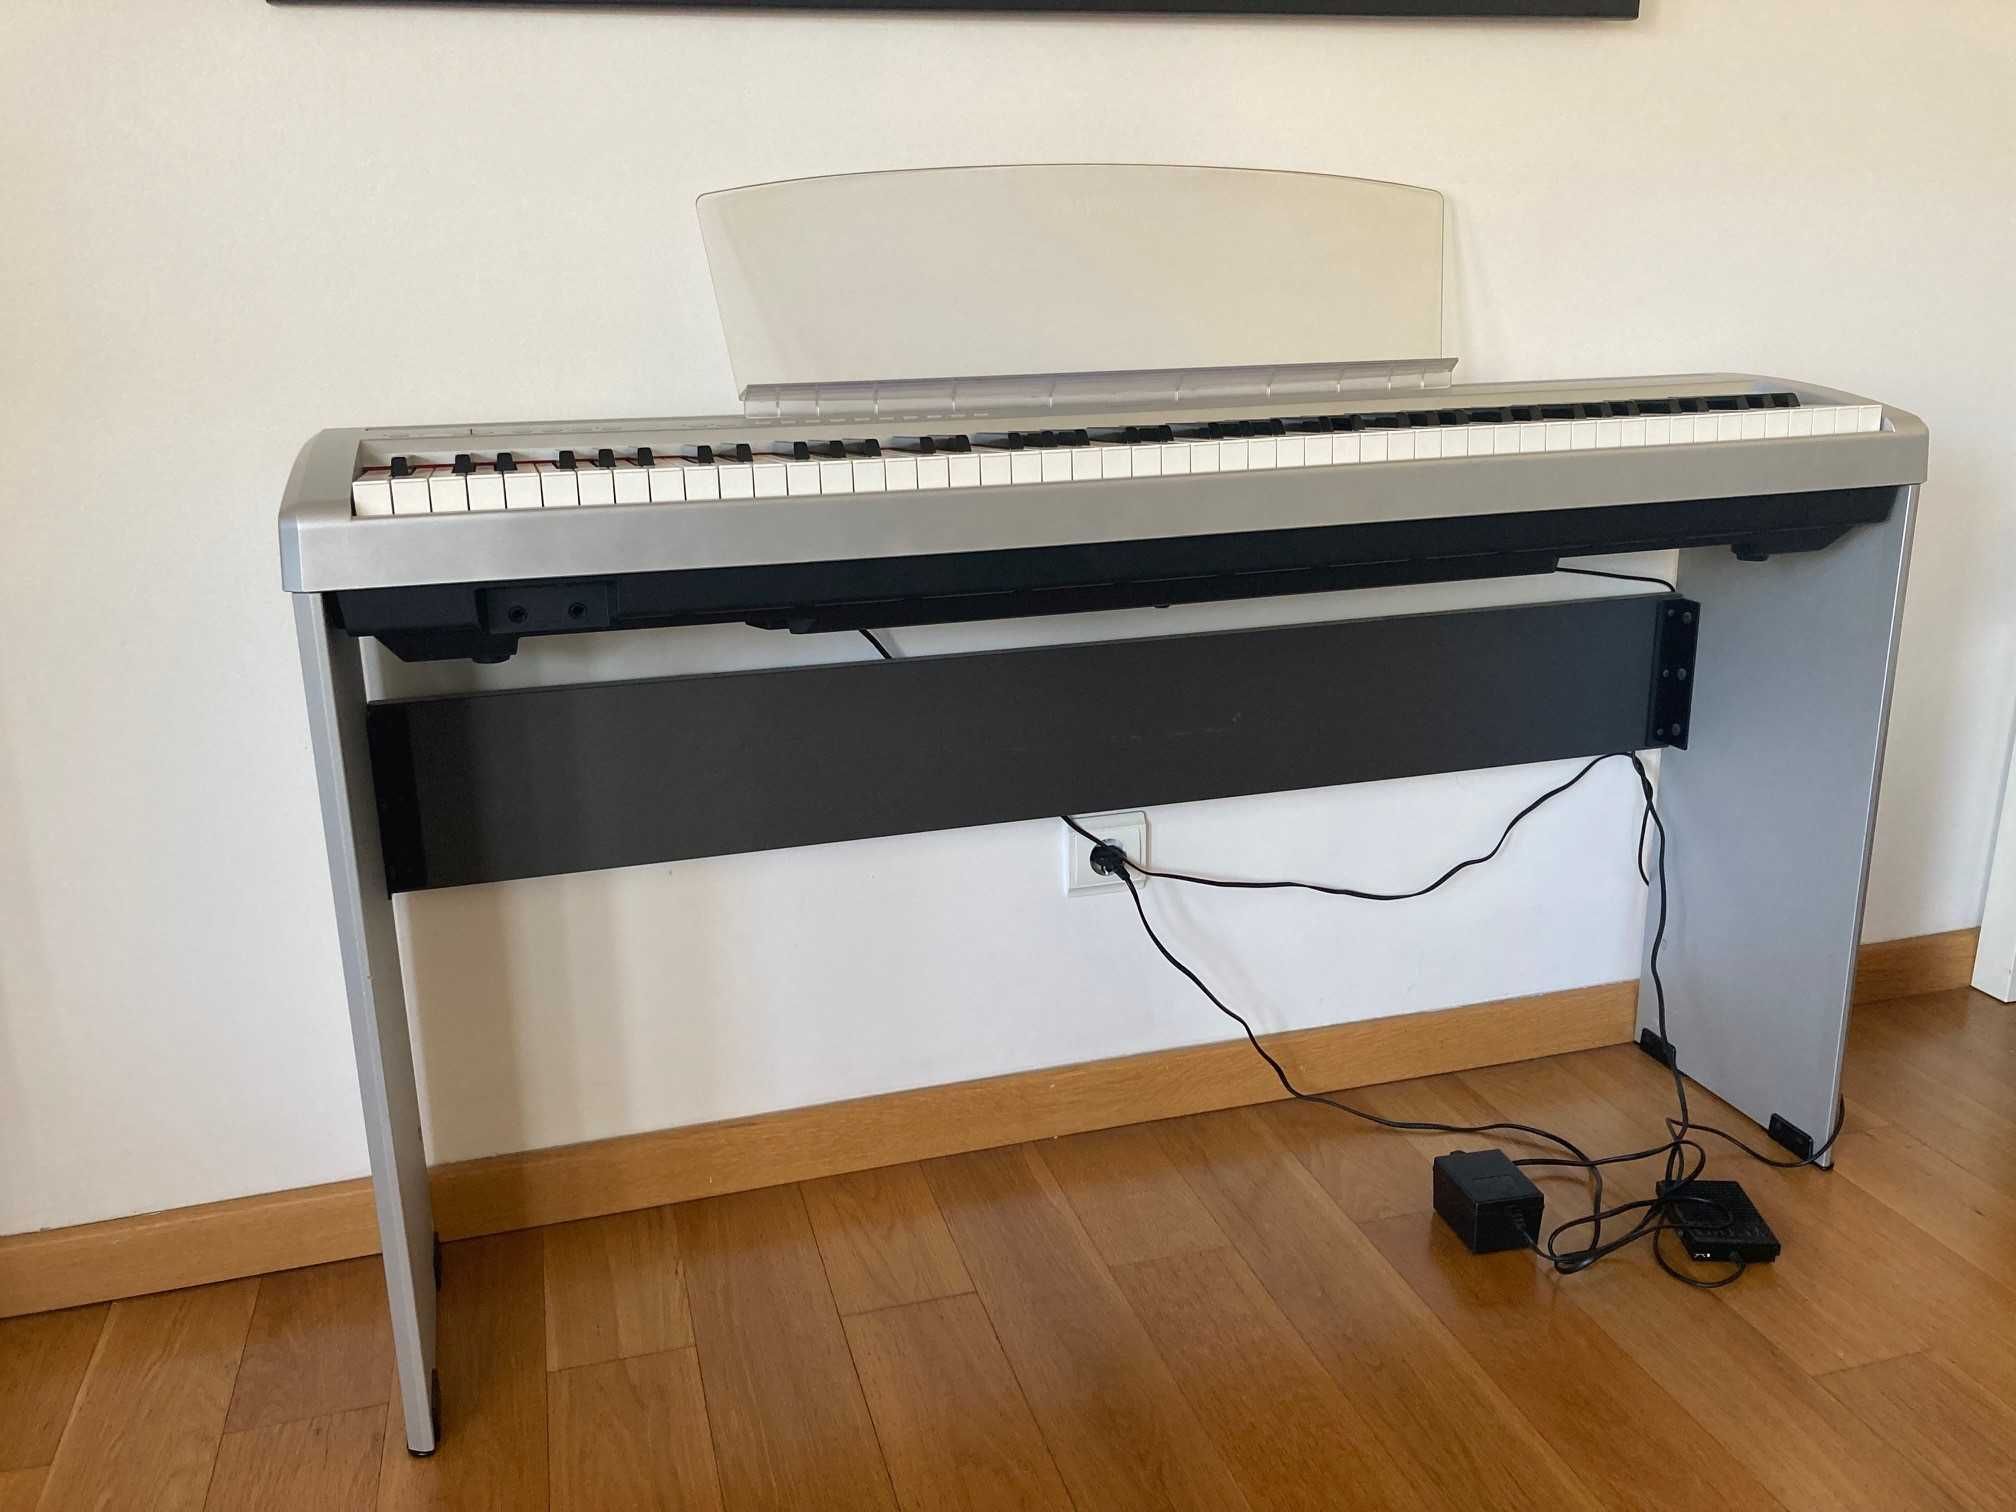 Piano Digital Yamaha P-85 - como novo